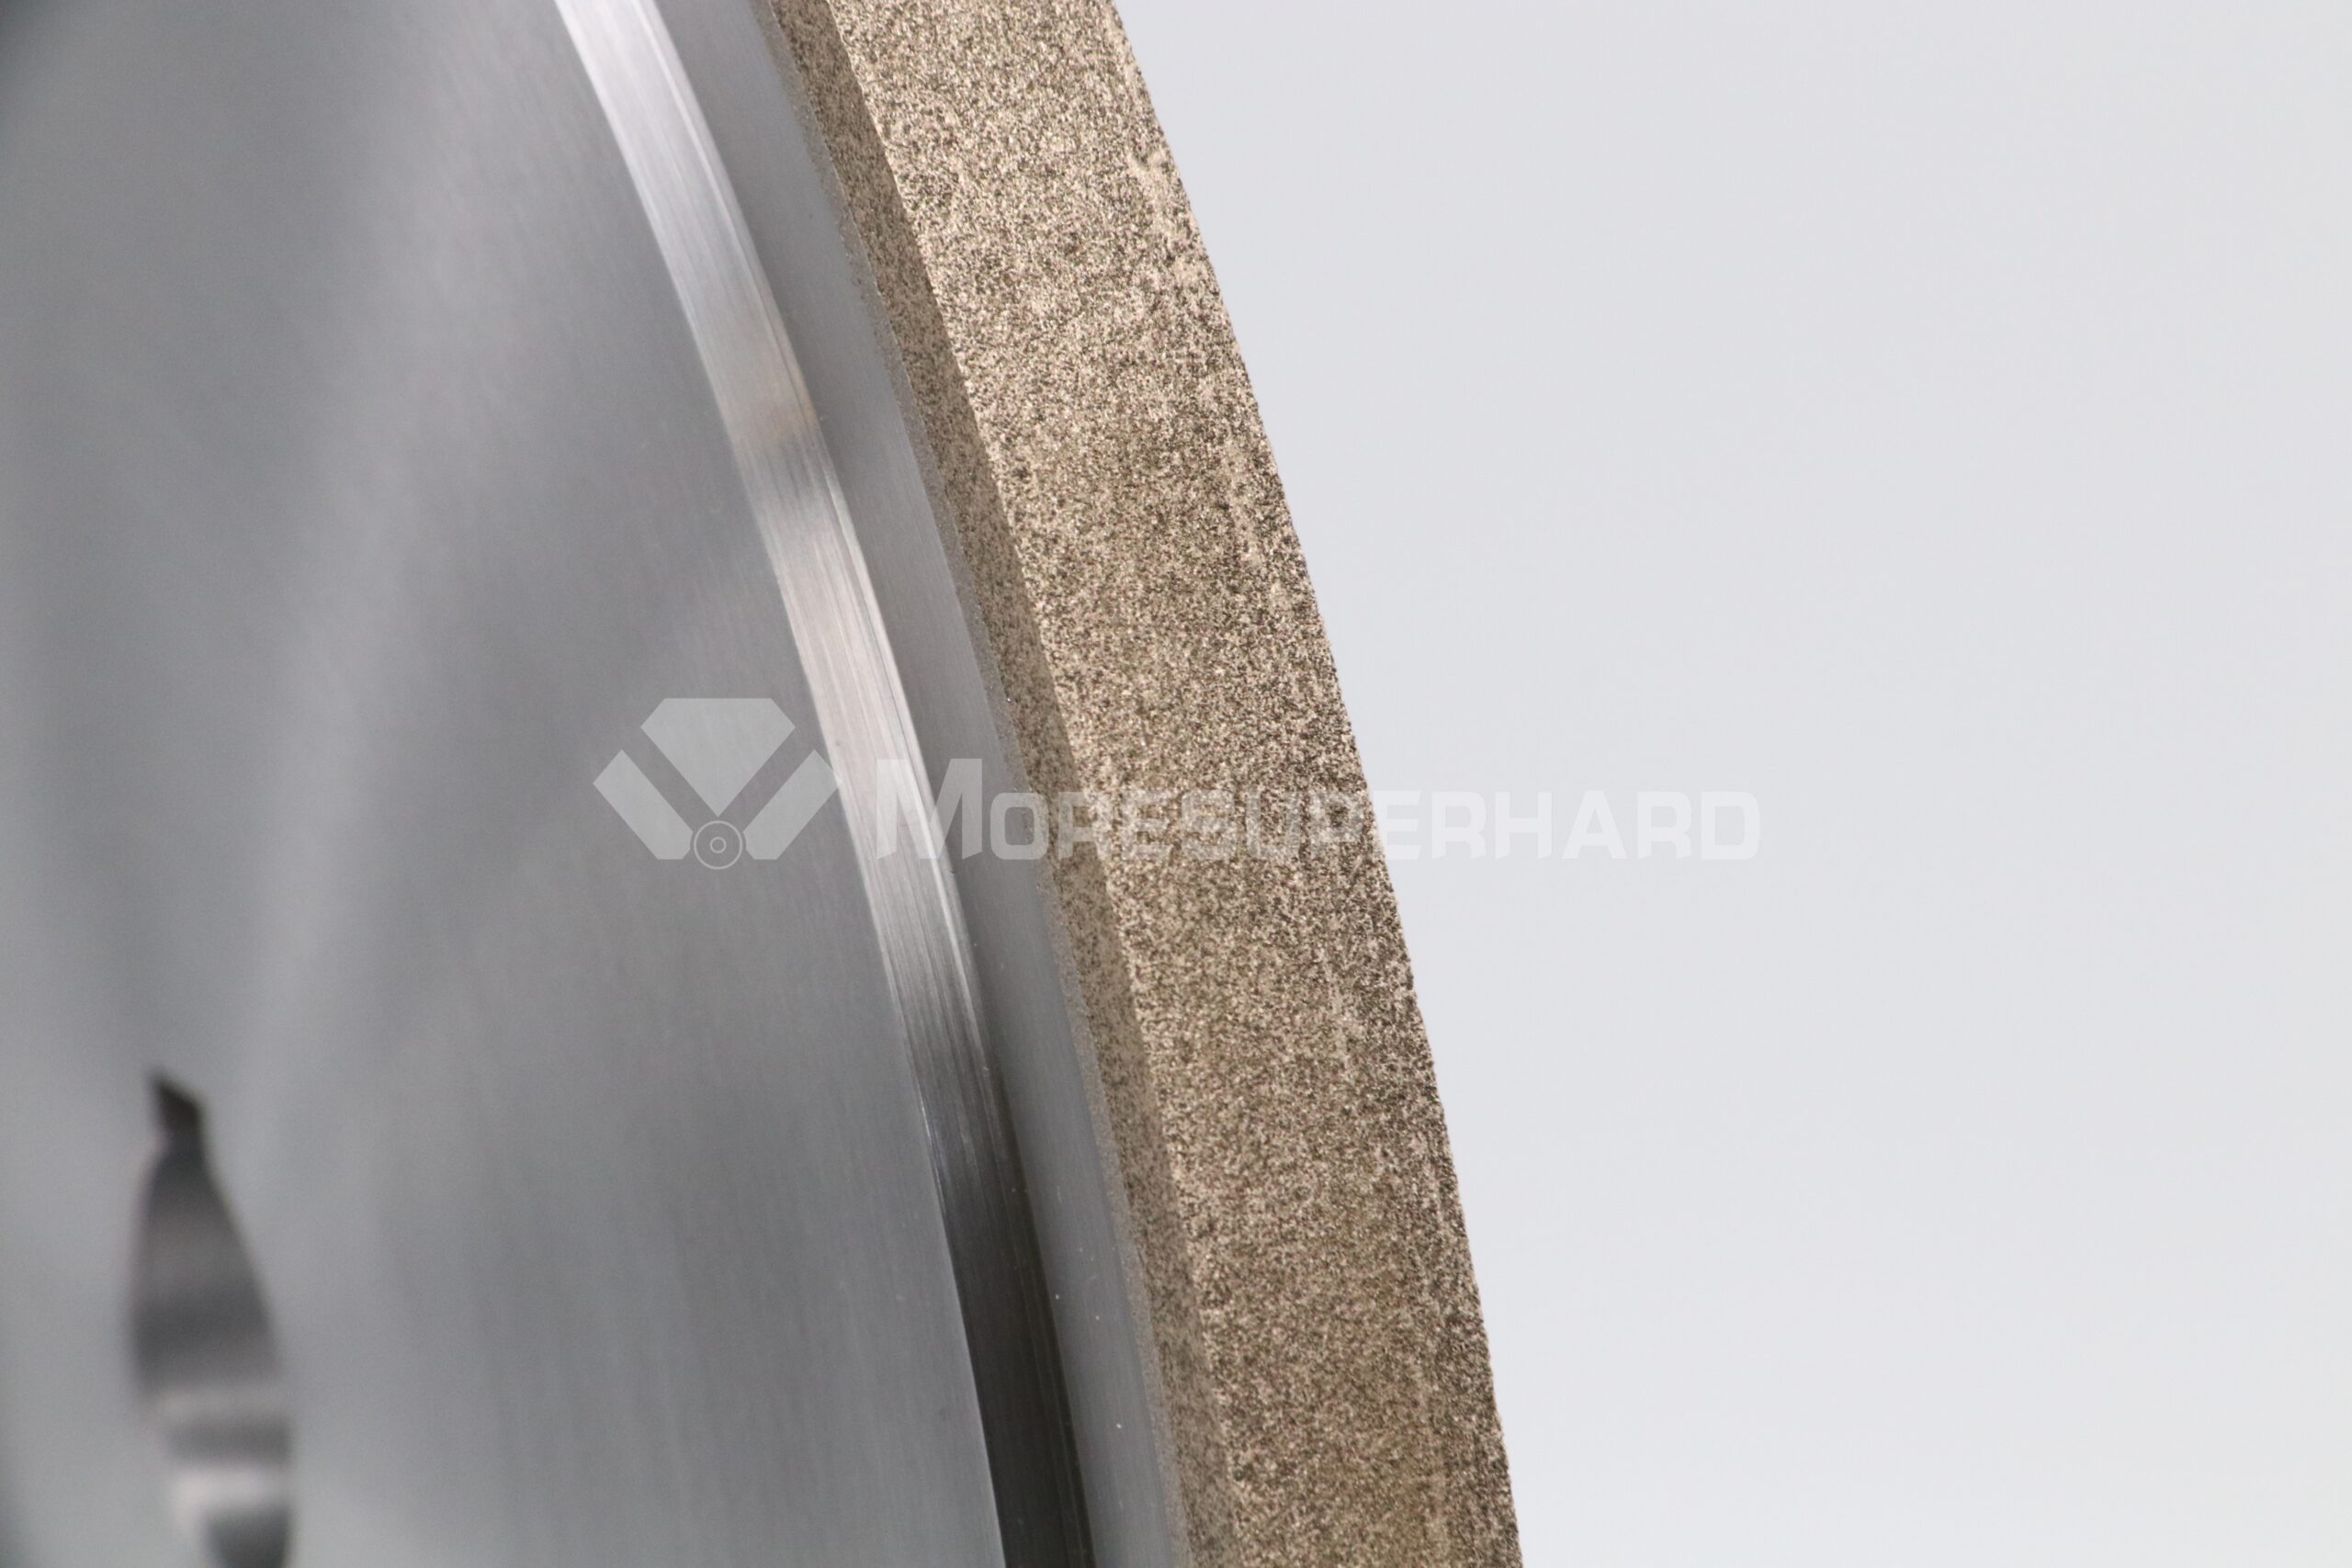 Long life Metal bond diamond grinding wheels for grinding ceramic and glass